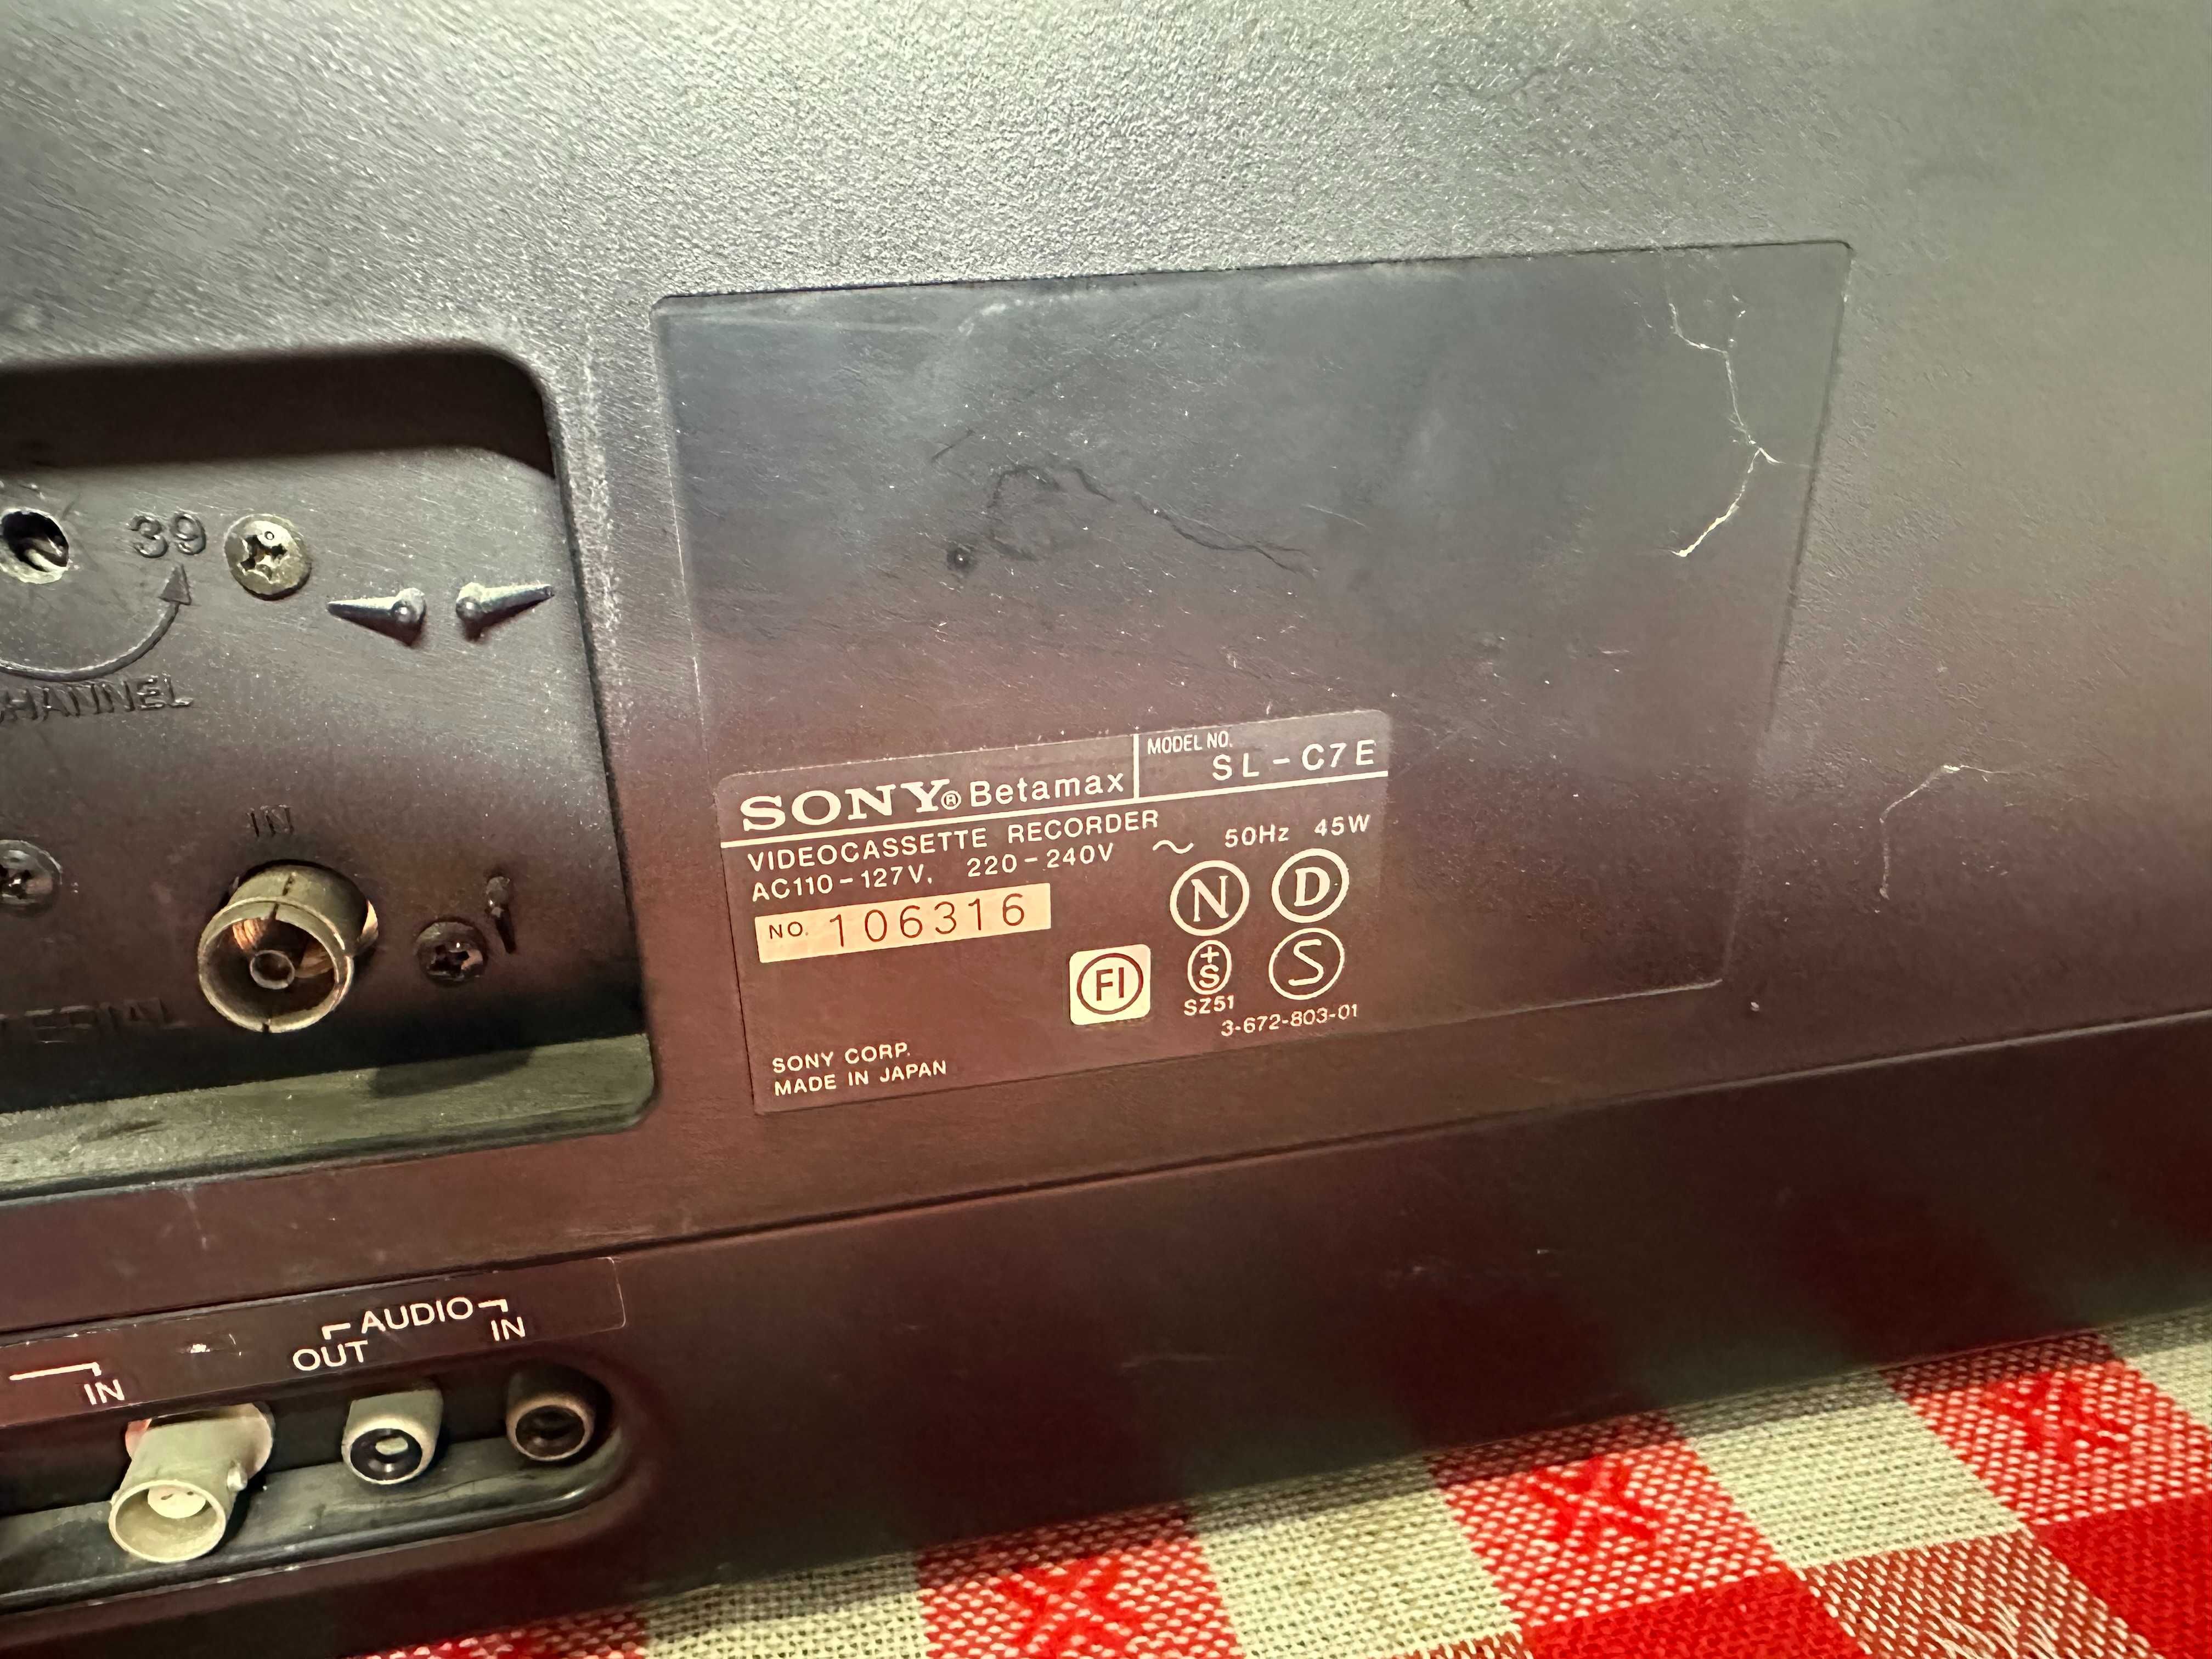 Sony SL-C7 Betamax